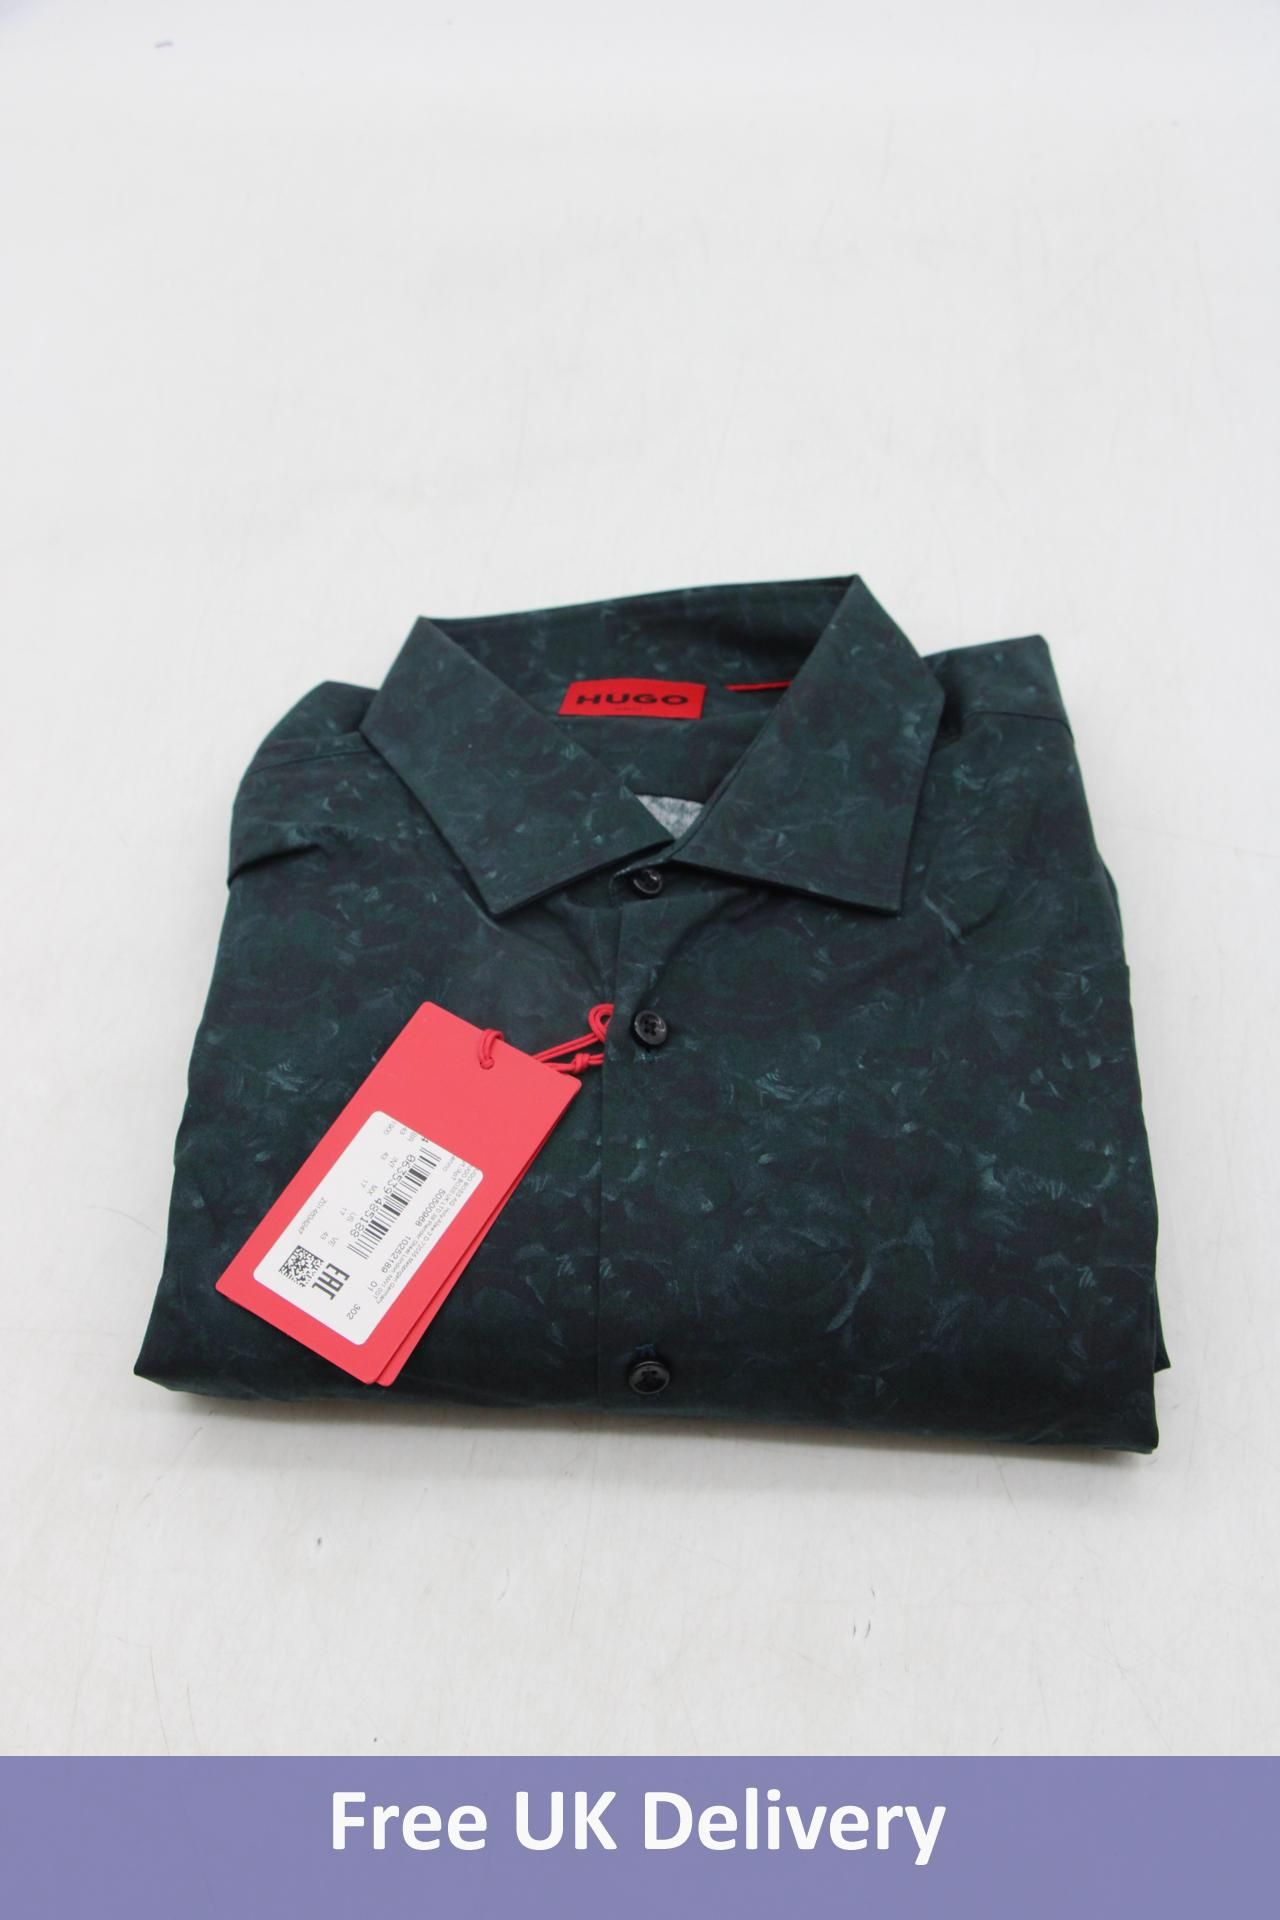 Hugo Boss Slim-fit shirt in floral print, Green/Black, Size